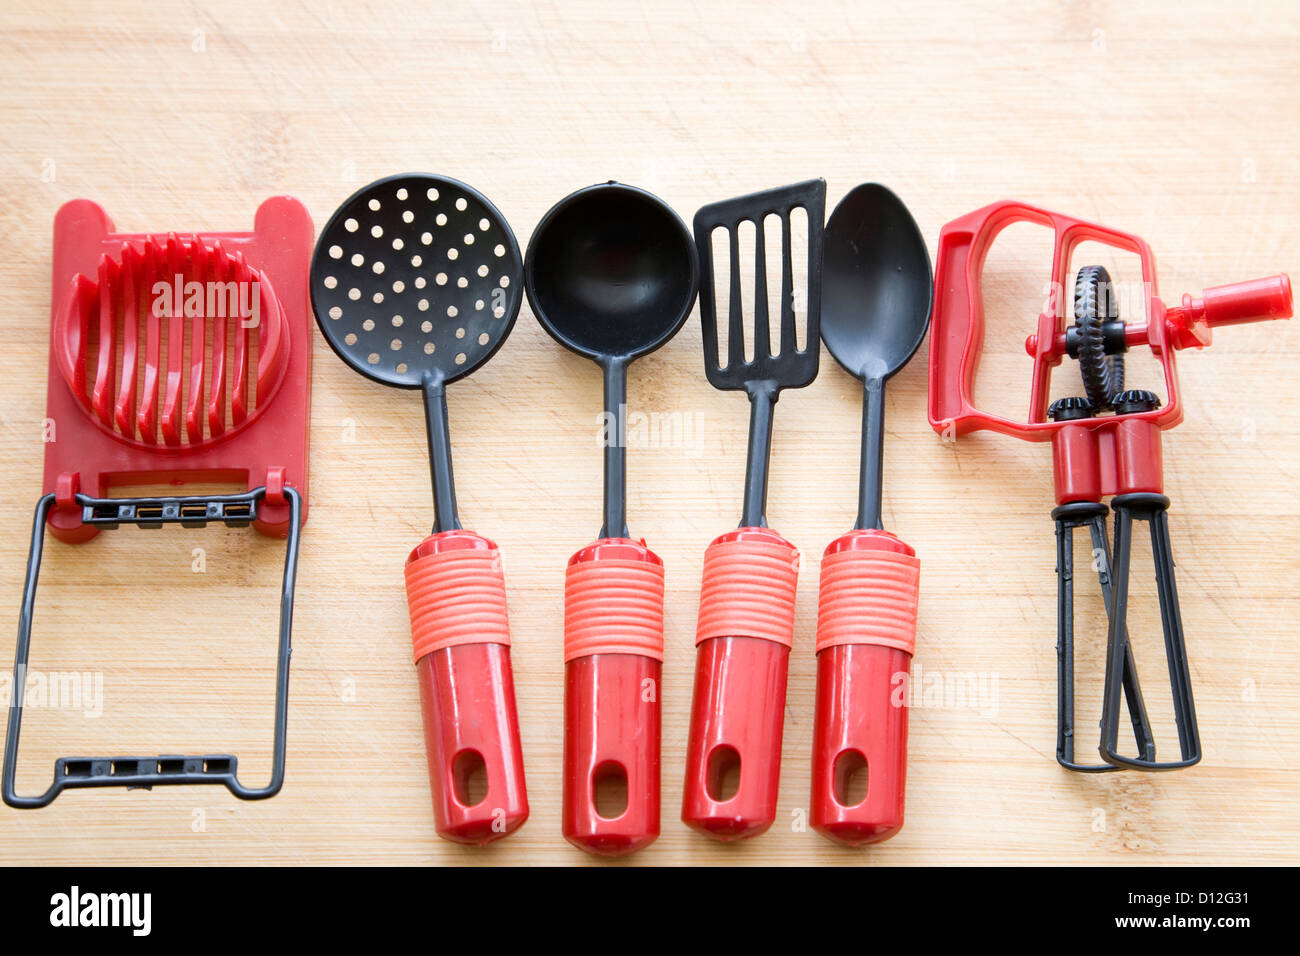 Cooking utensils Stock Photo